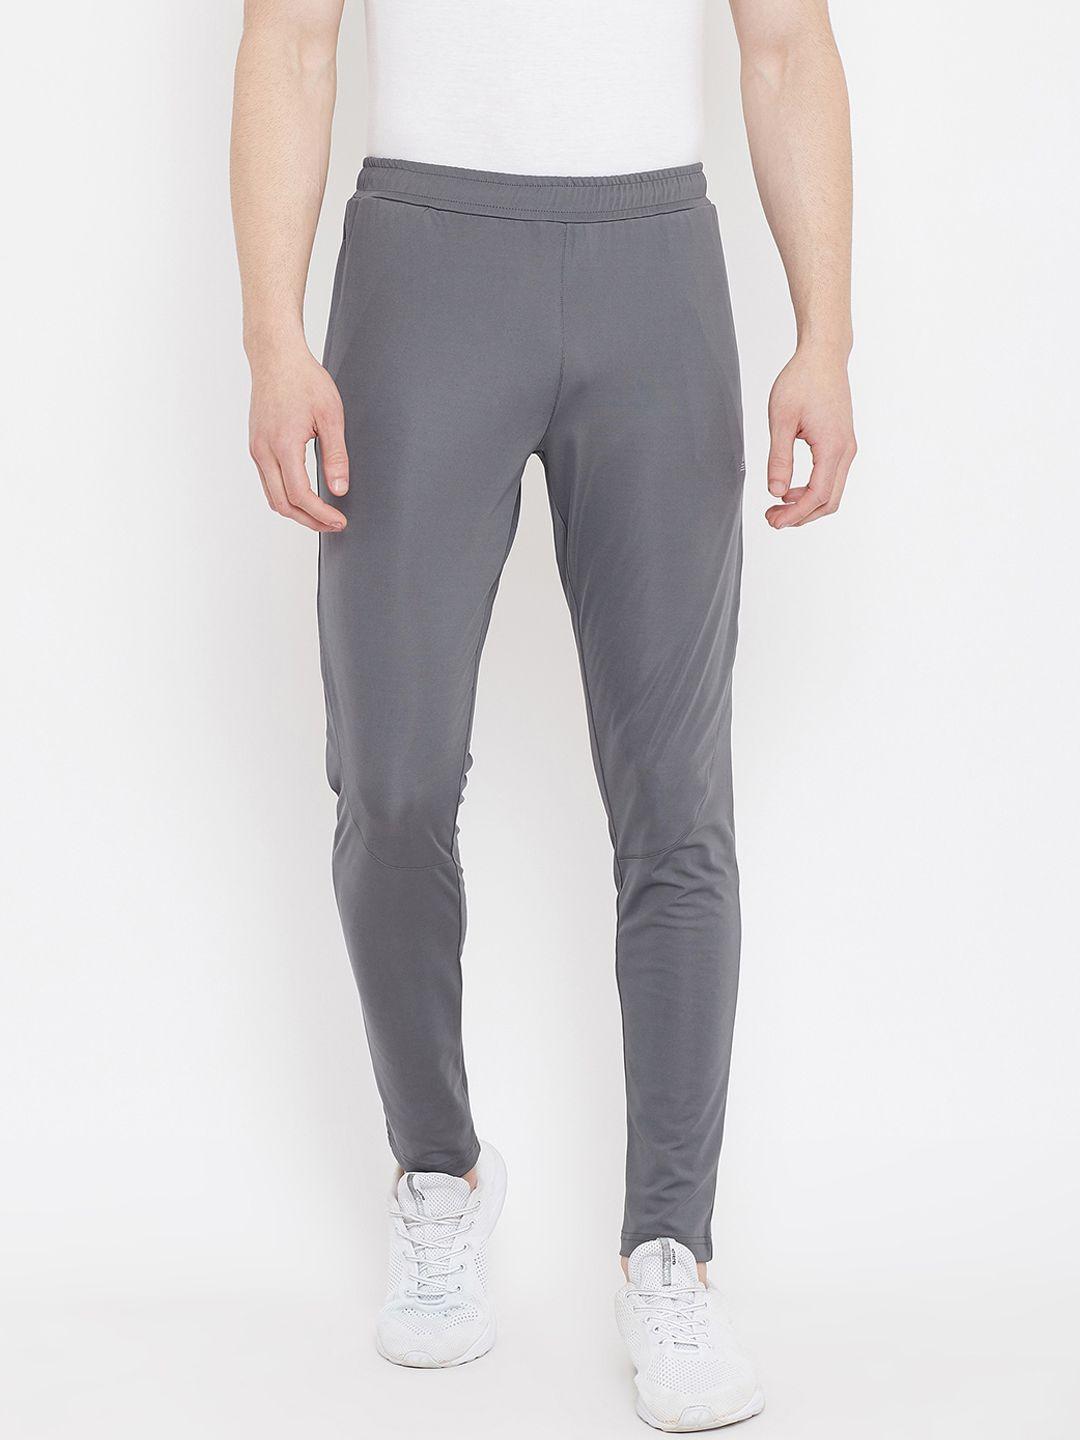 athlisis men grey solid slim-fit track pants